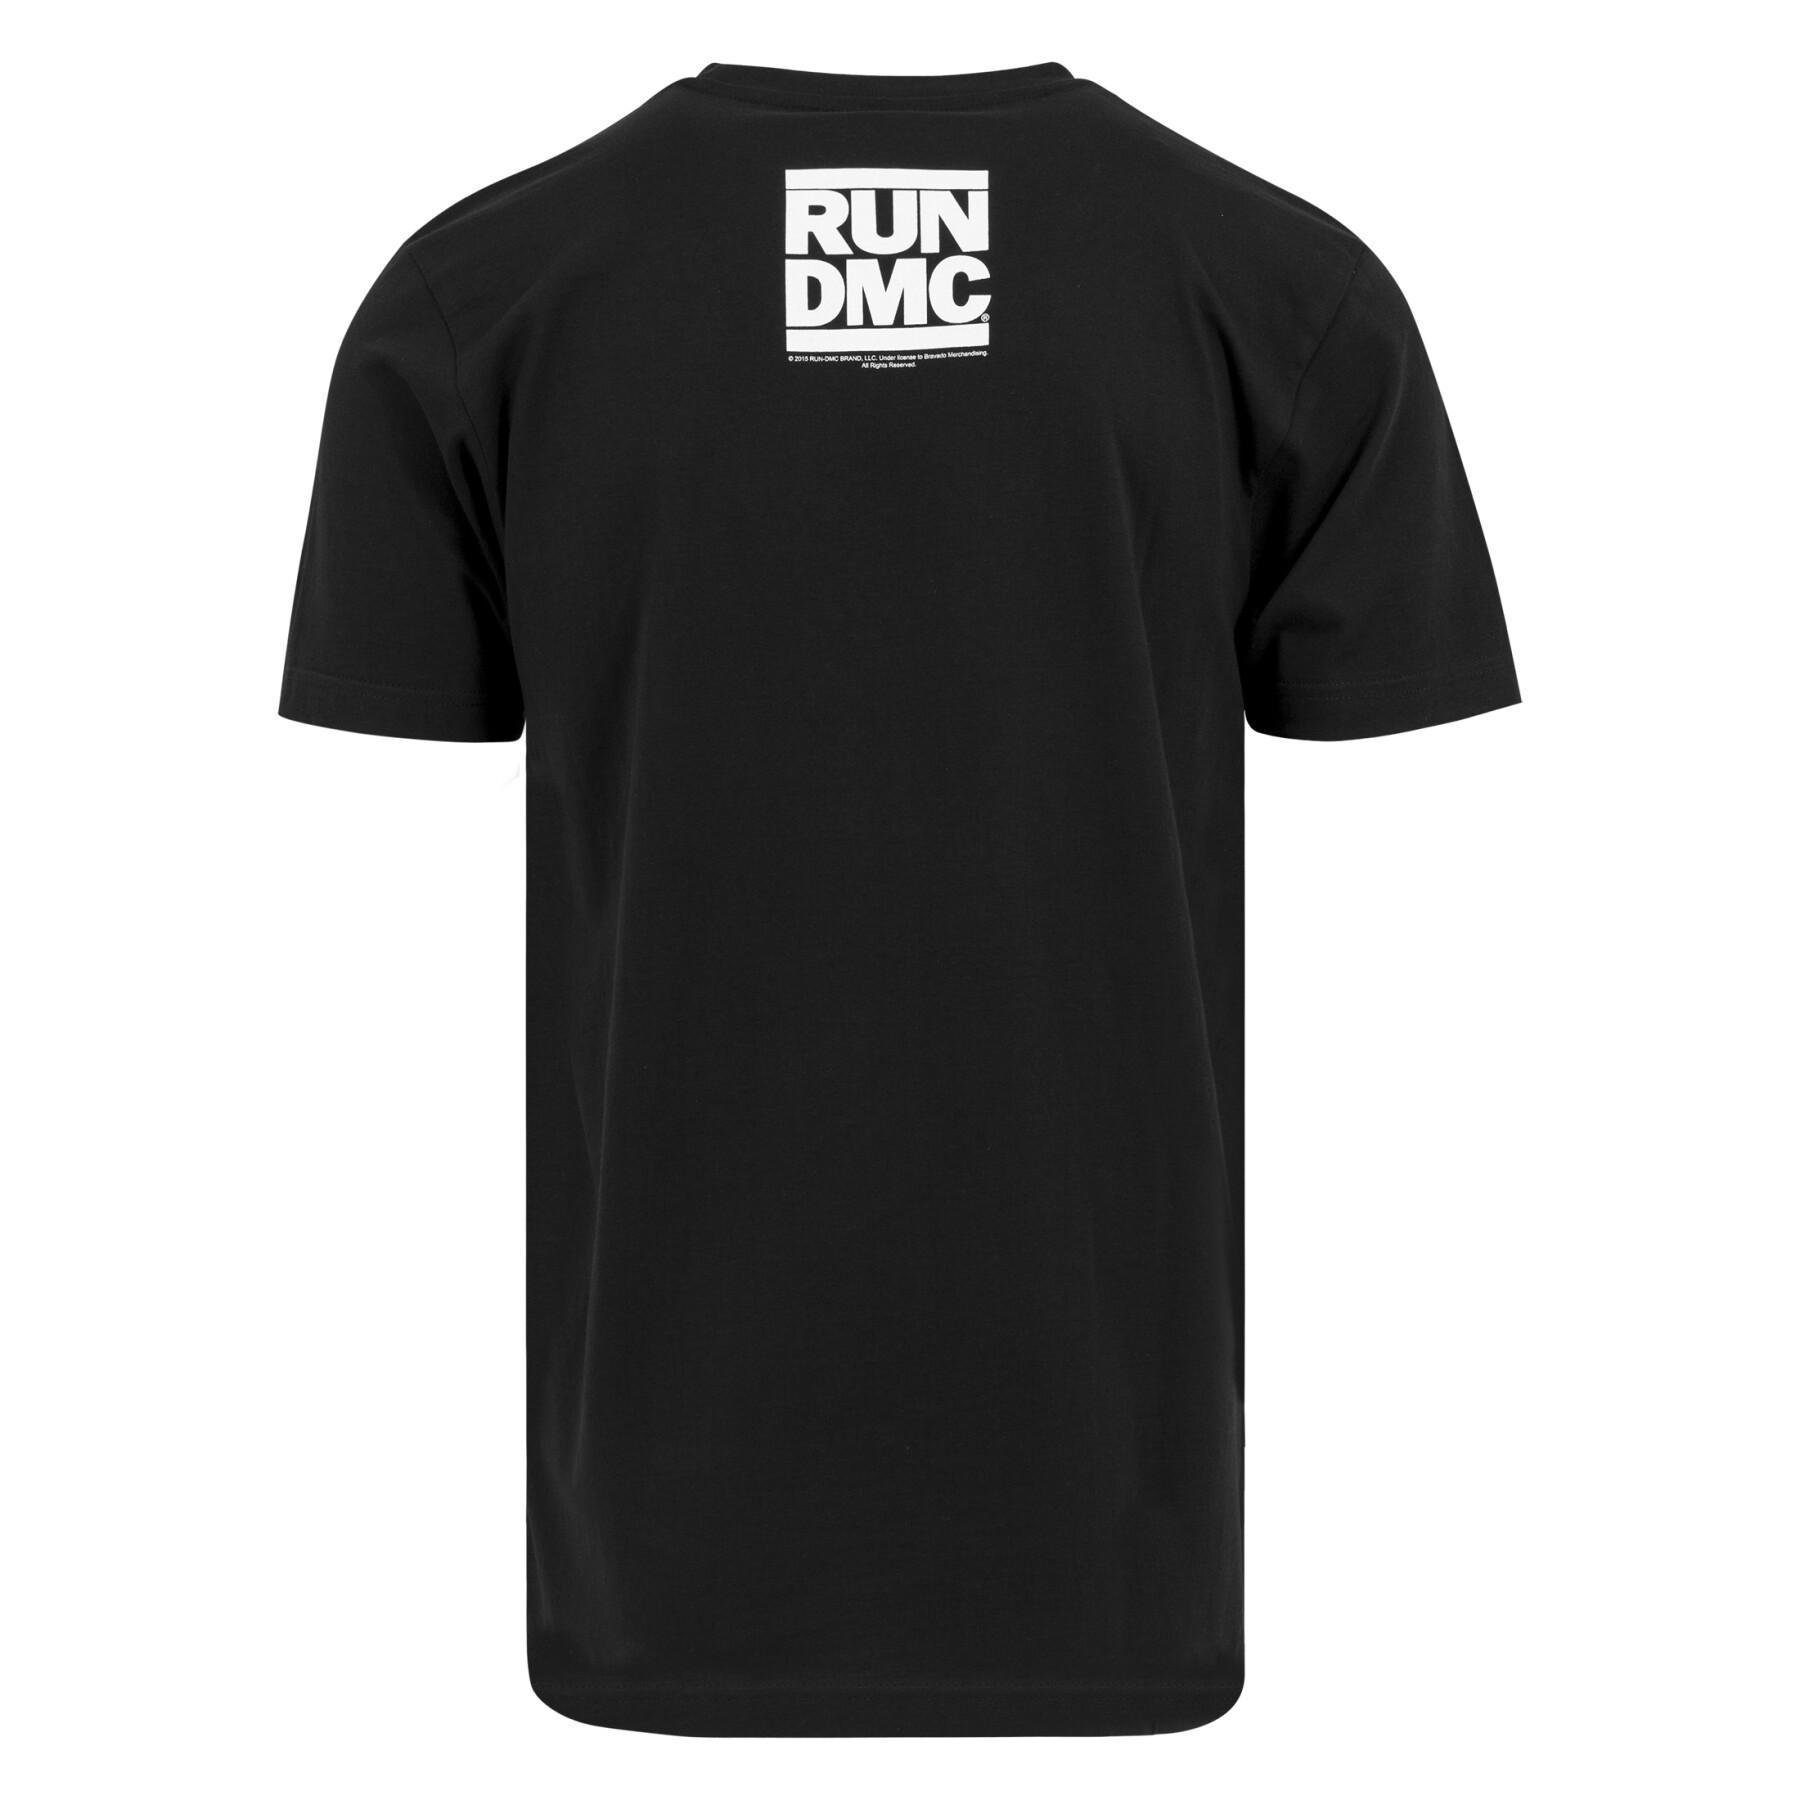 T-shirt Mister Tee run dmc king of rock